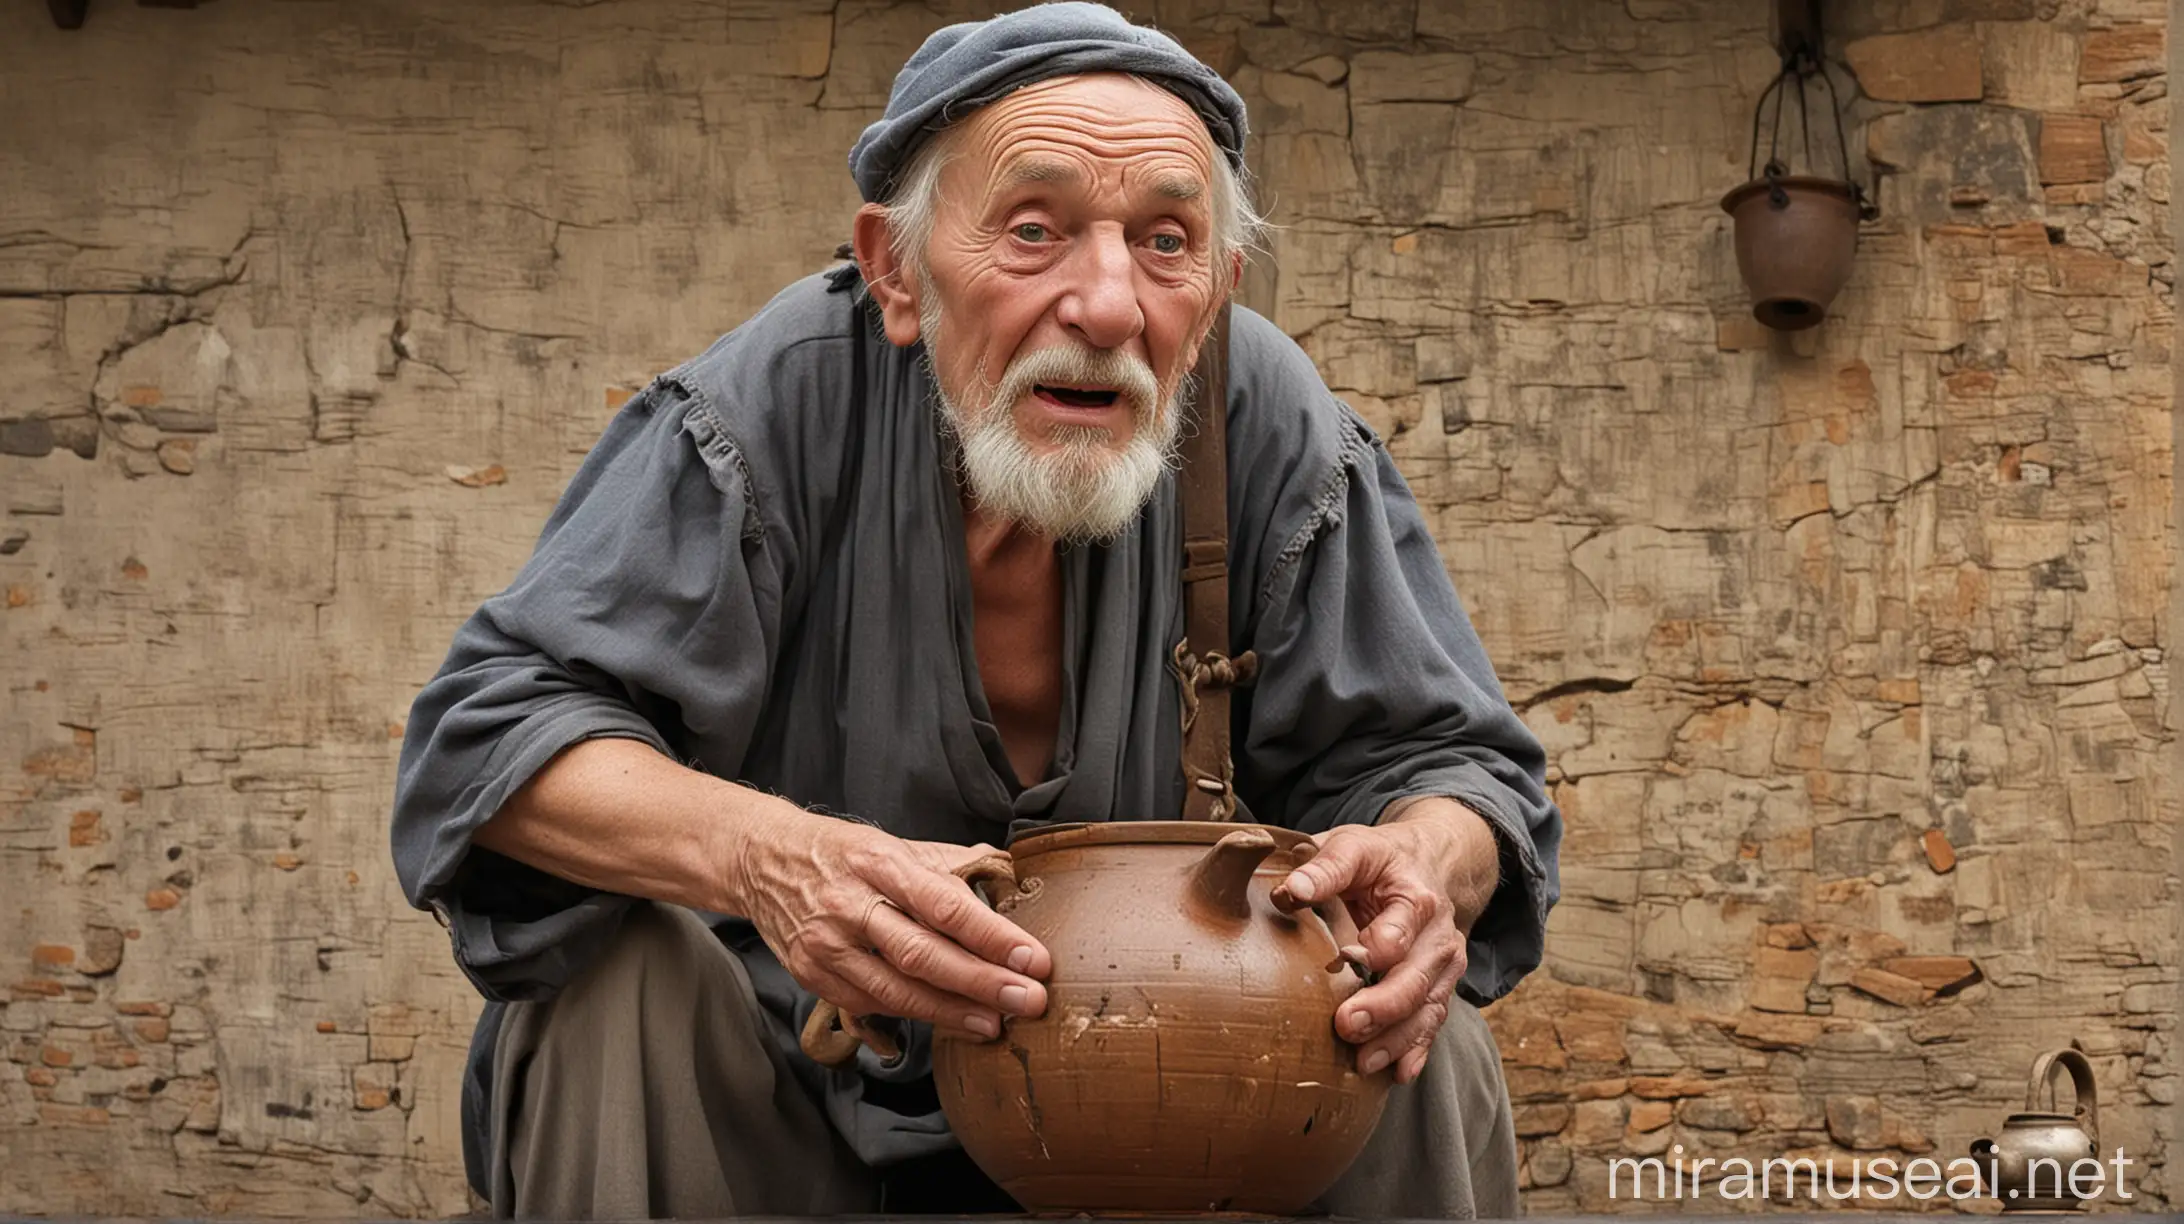 Elderly Storyteller Sharing Parable of the Cracked Jug